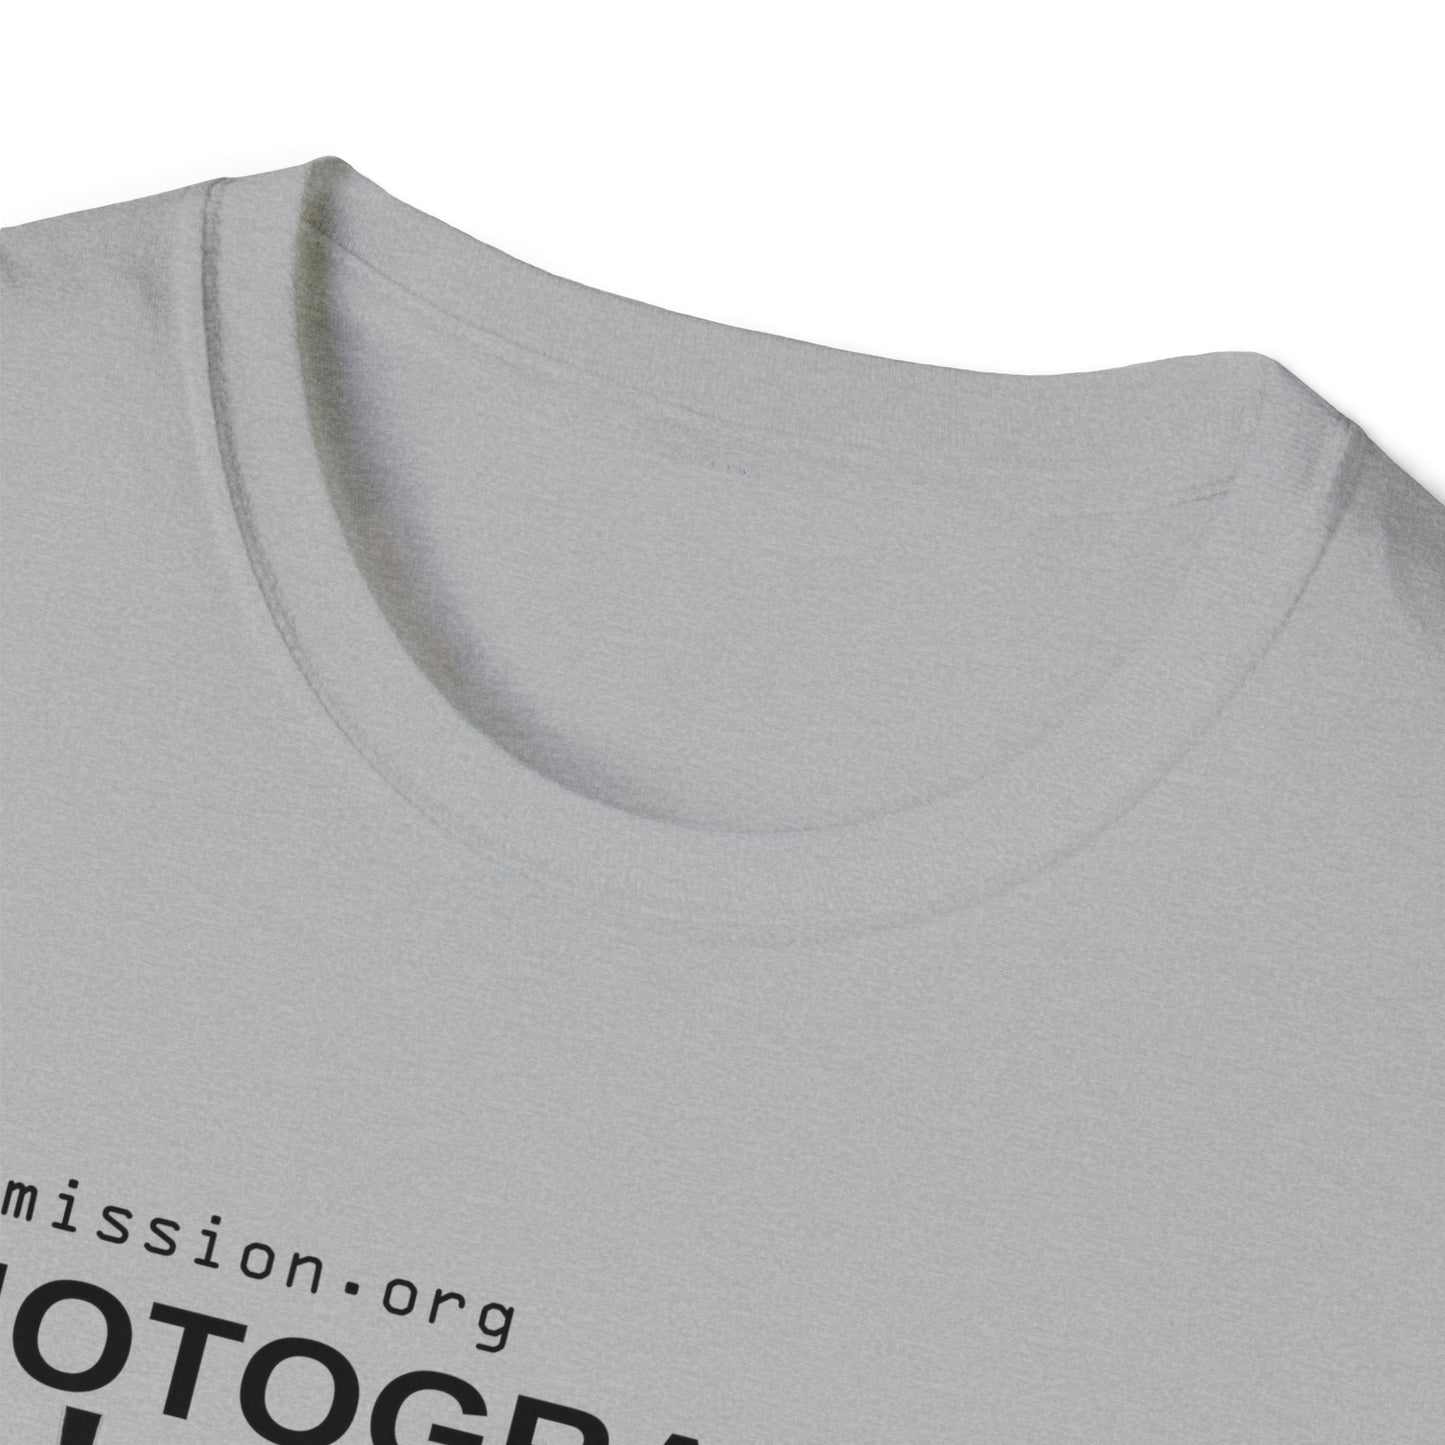 Fotomission Camera T-Shirt